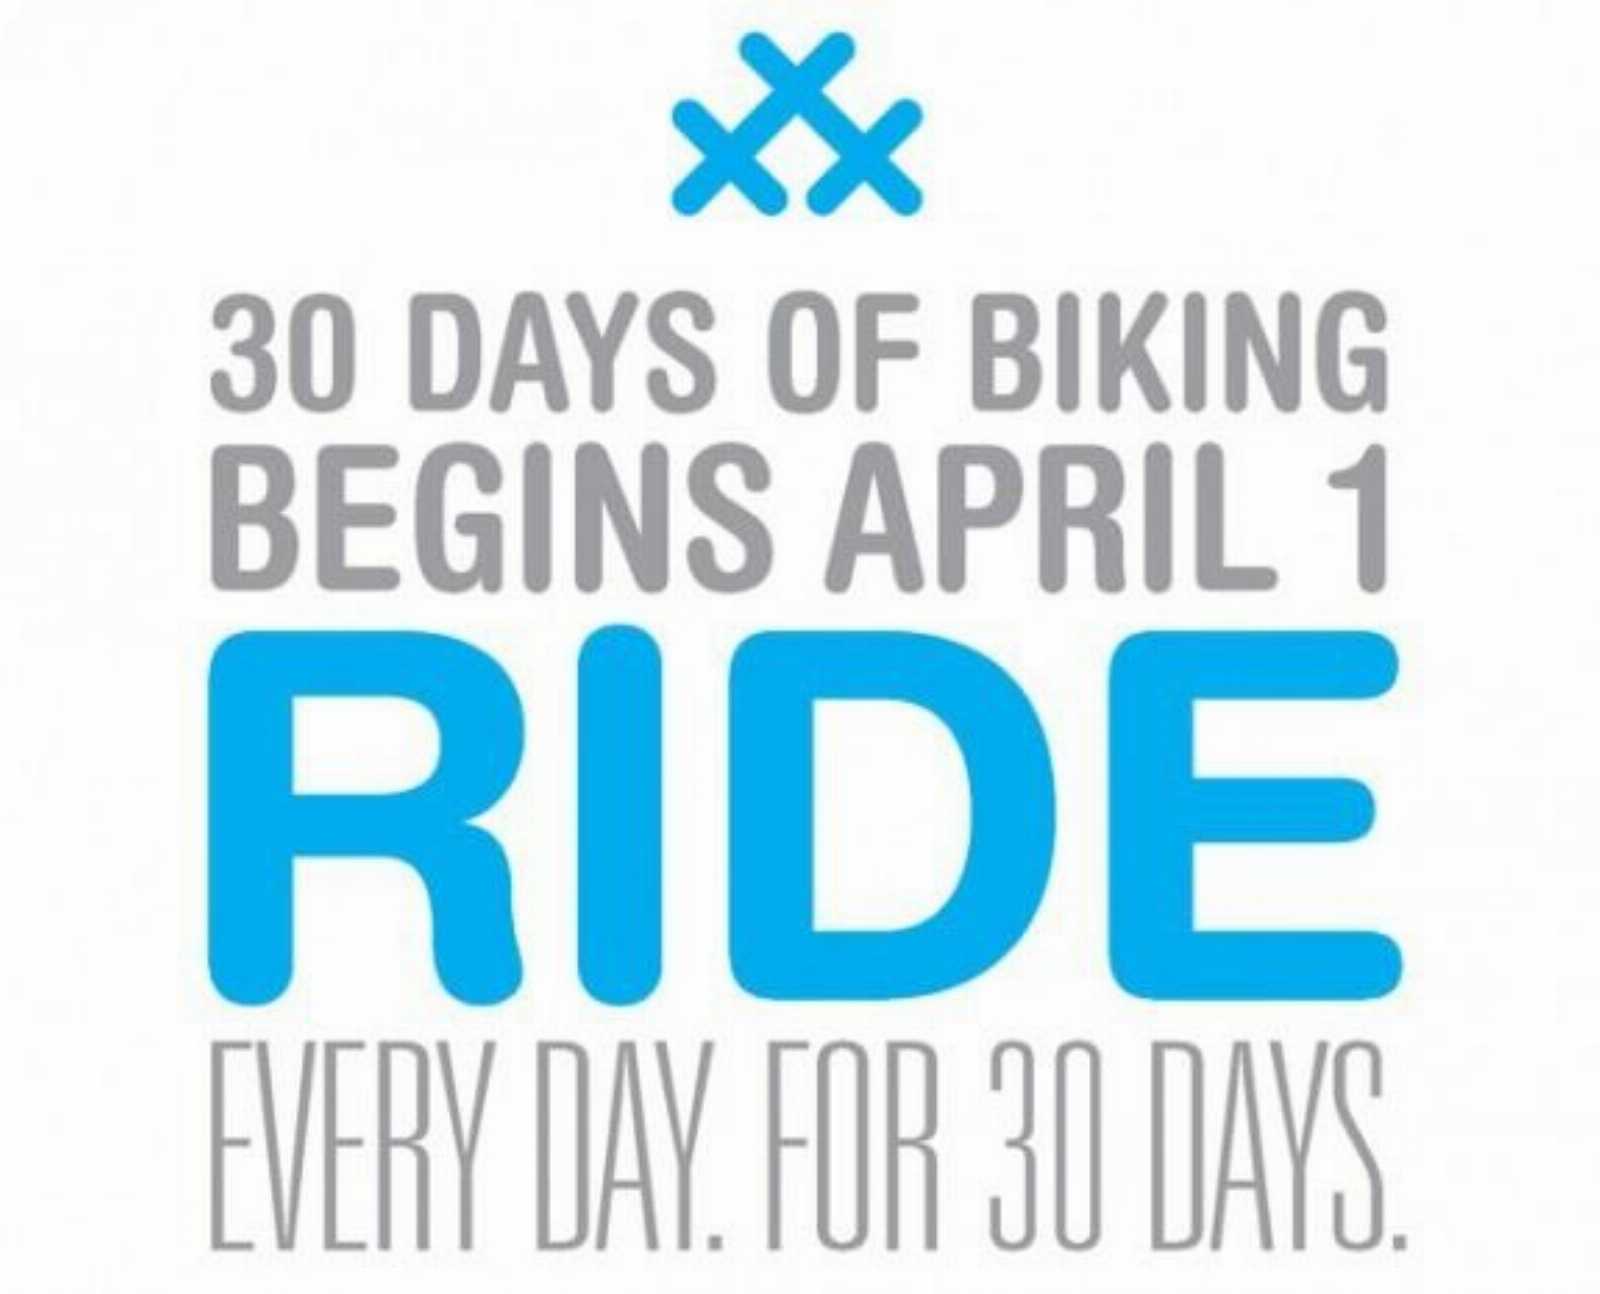 Акция 30 дней на велосипеде!